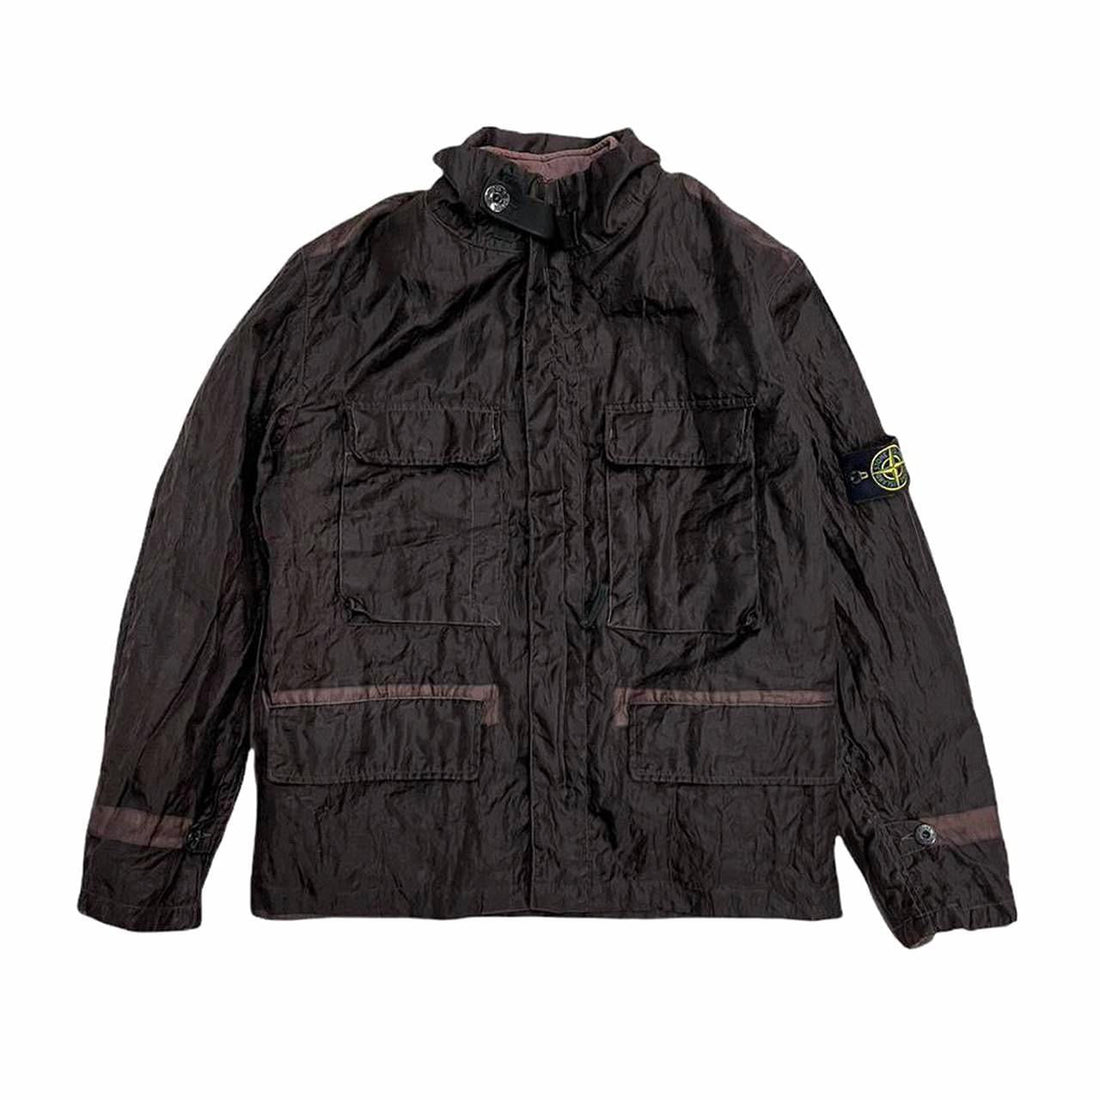 Stone Island 2002 monofilament jacket